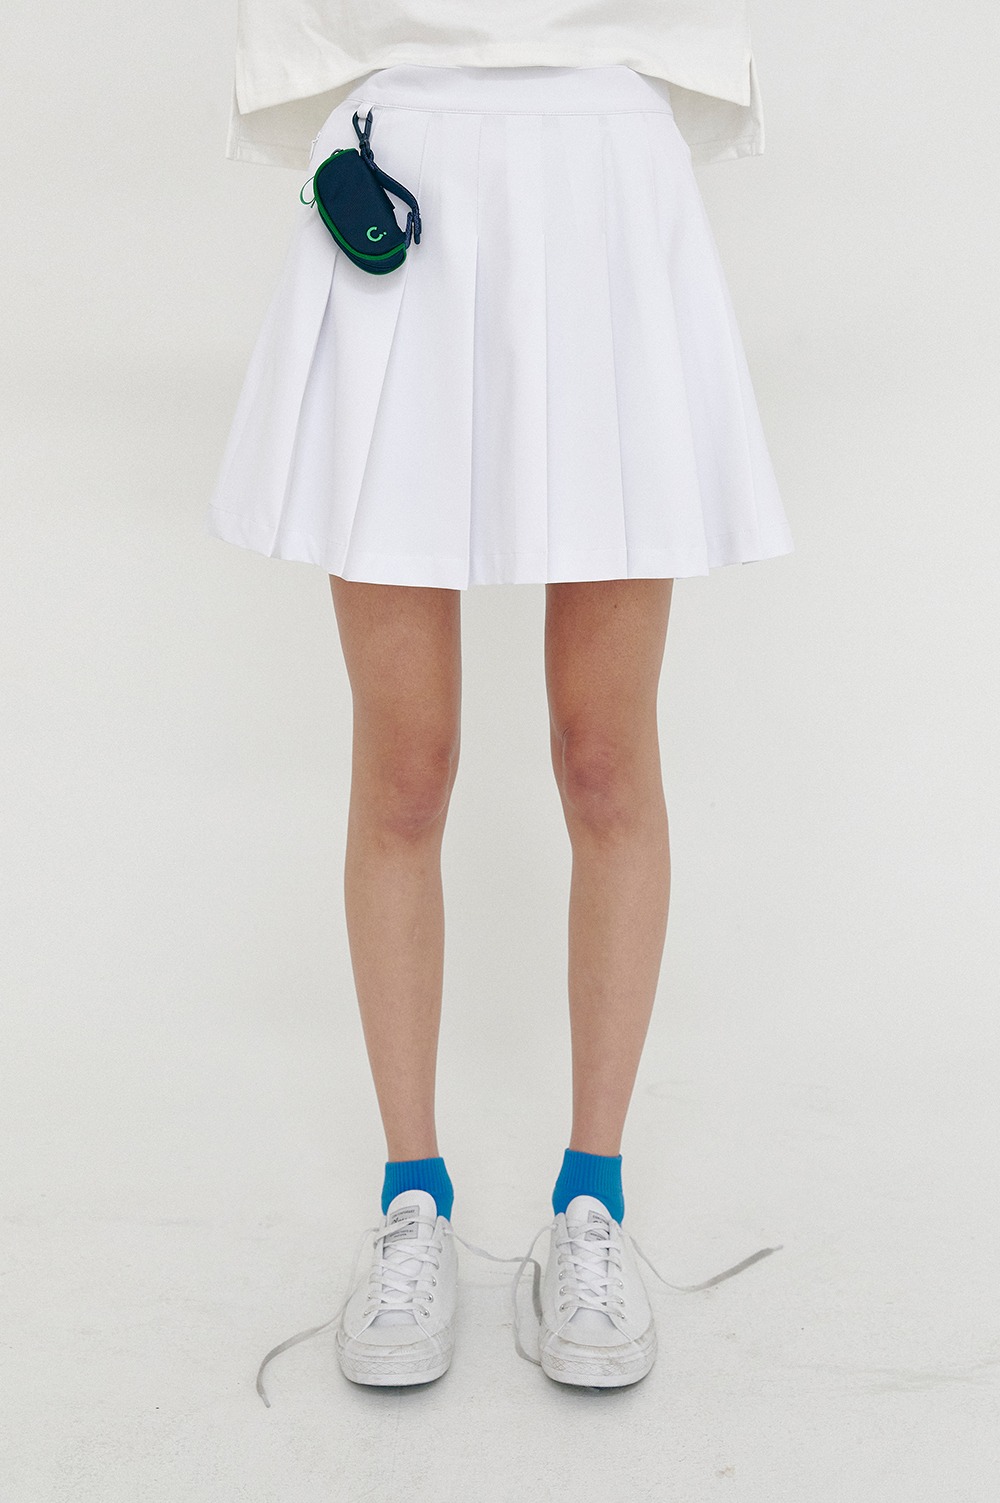 clove - [SS21 clove] New Pleated Skirt White